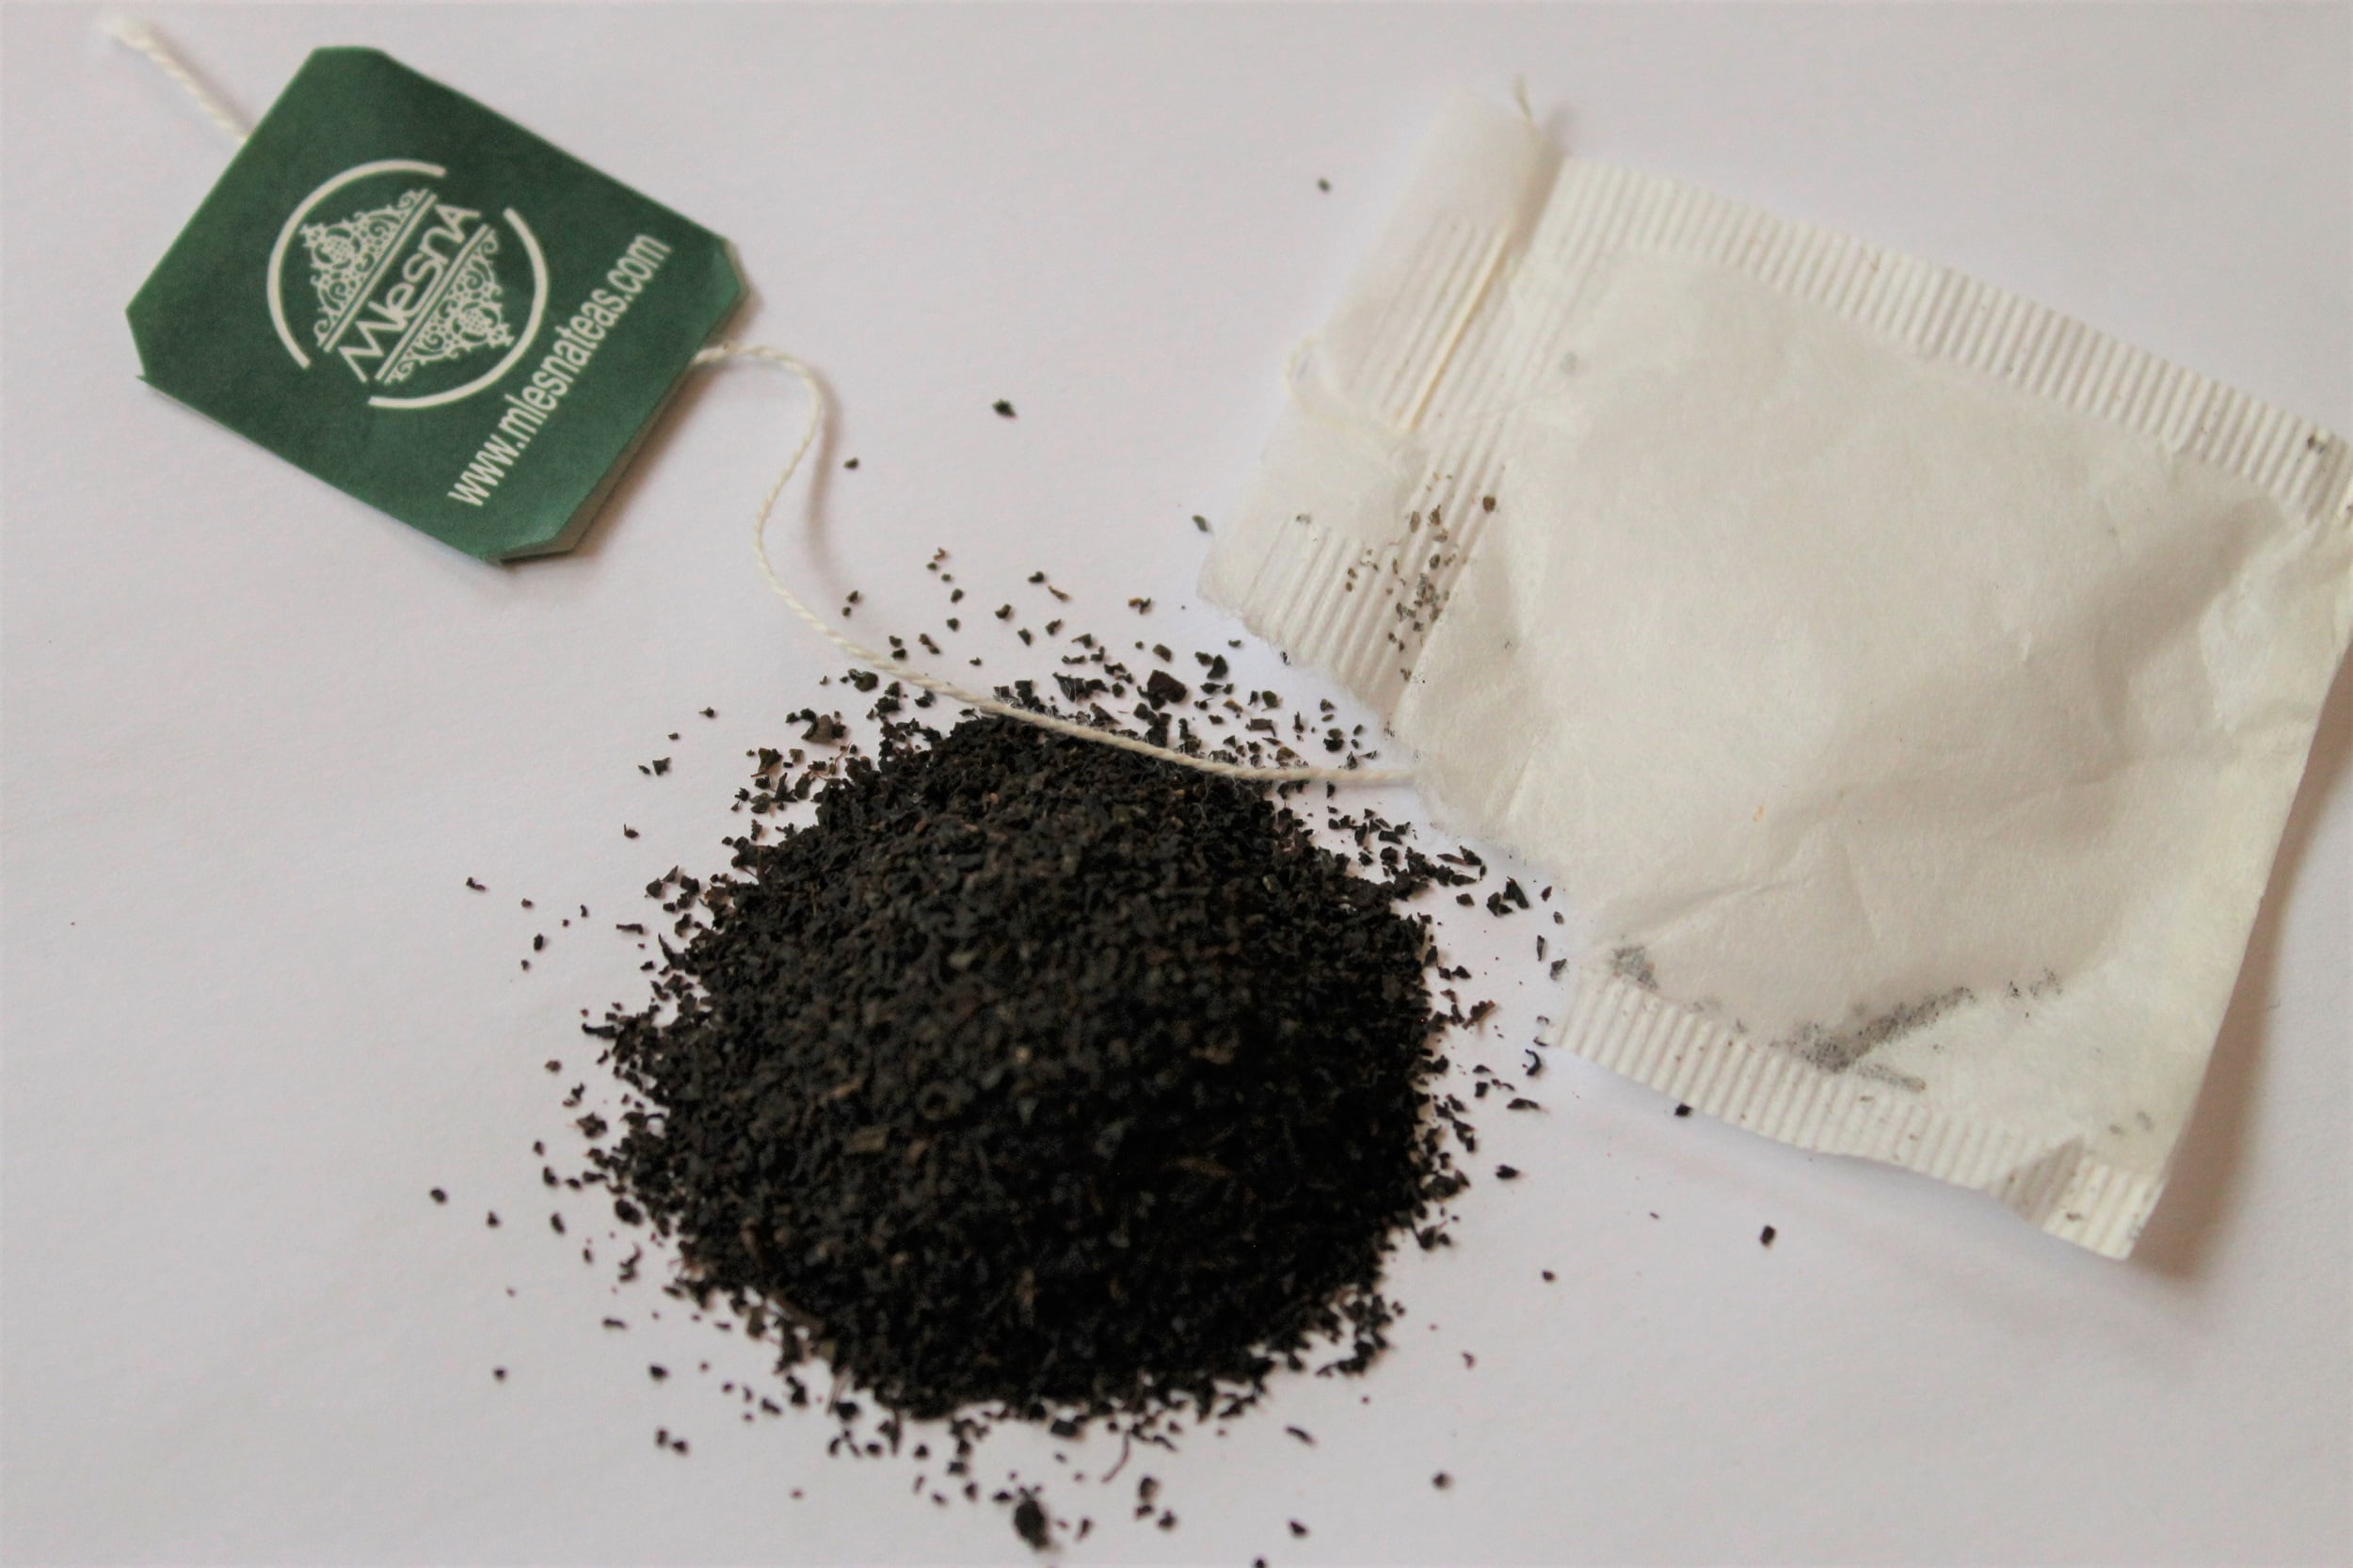 black tea from uva sri lanka